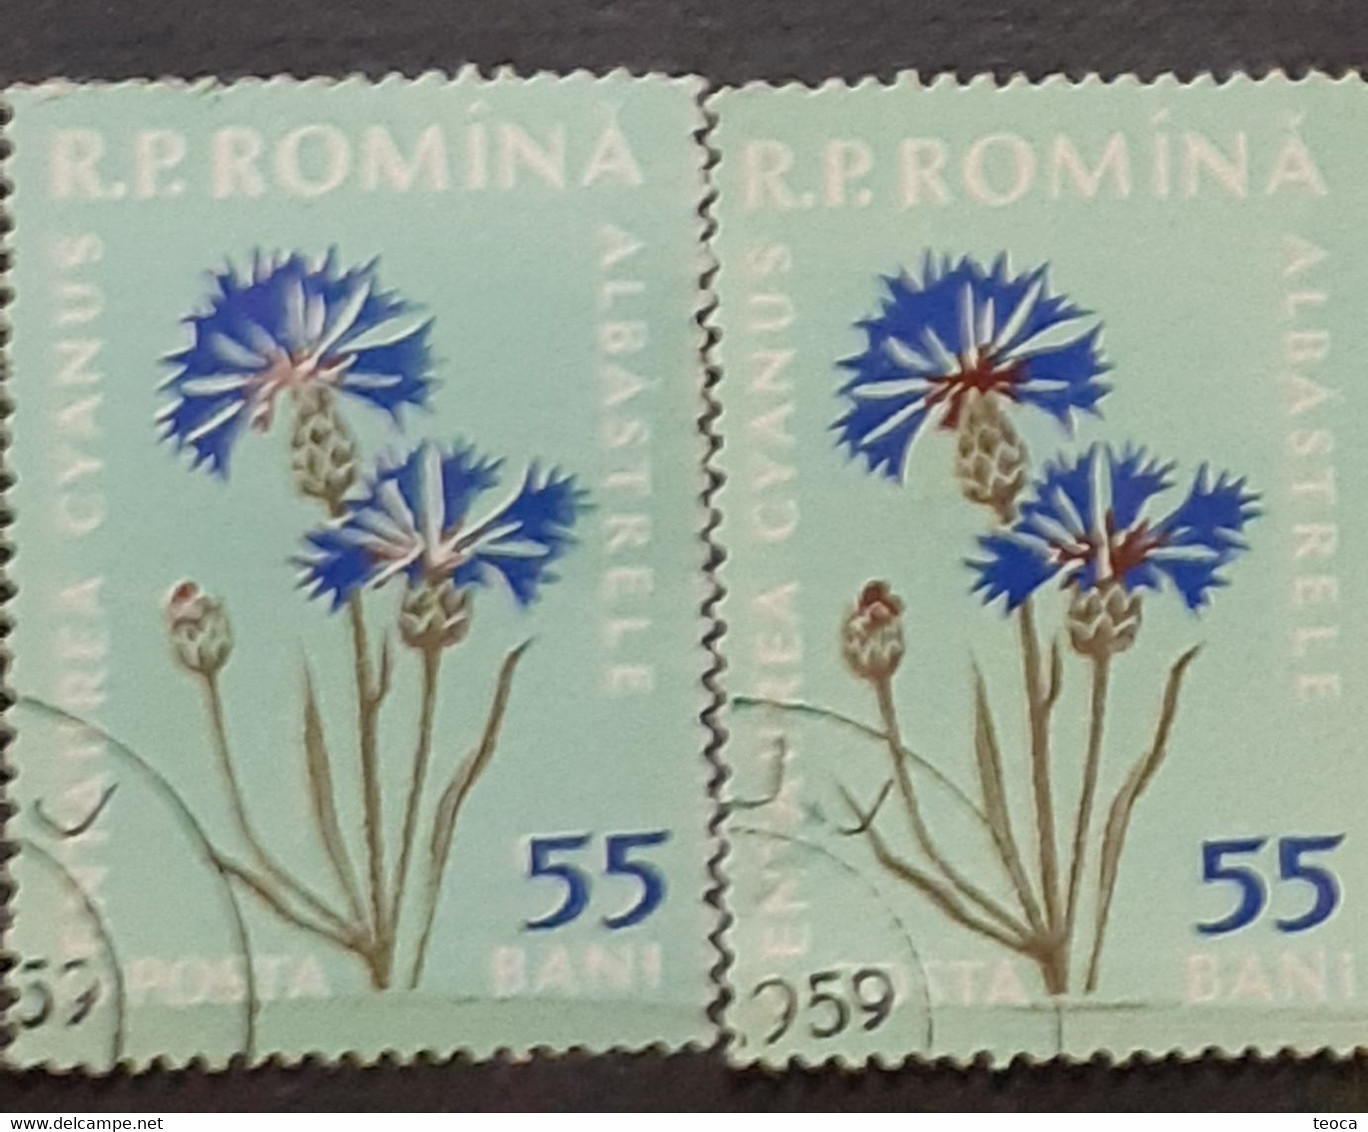 Errors Romania 1959  Mi 1817 printed double white leaf flower used